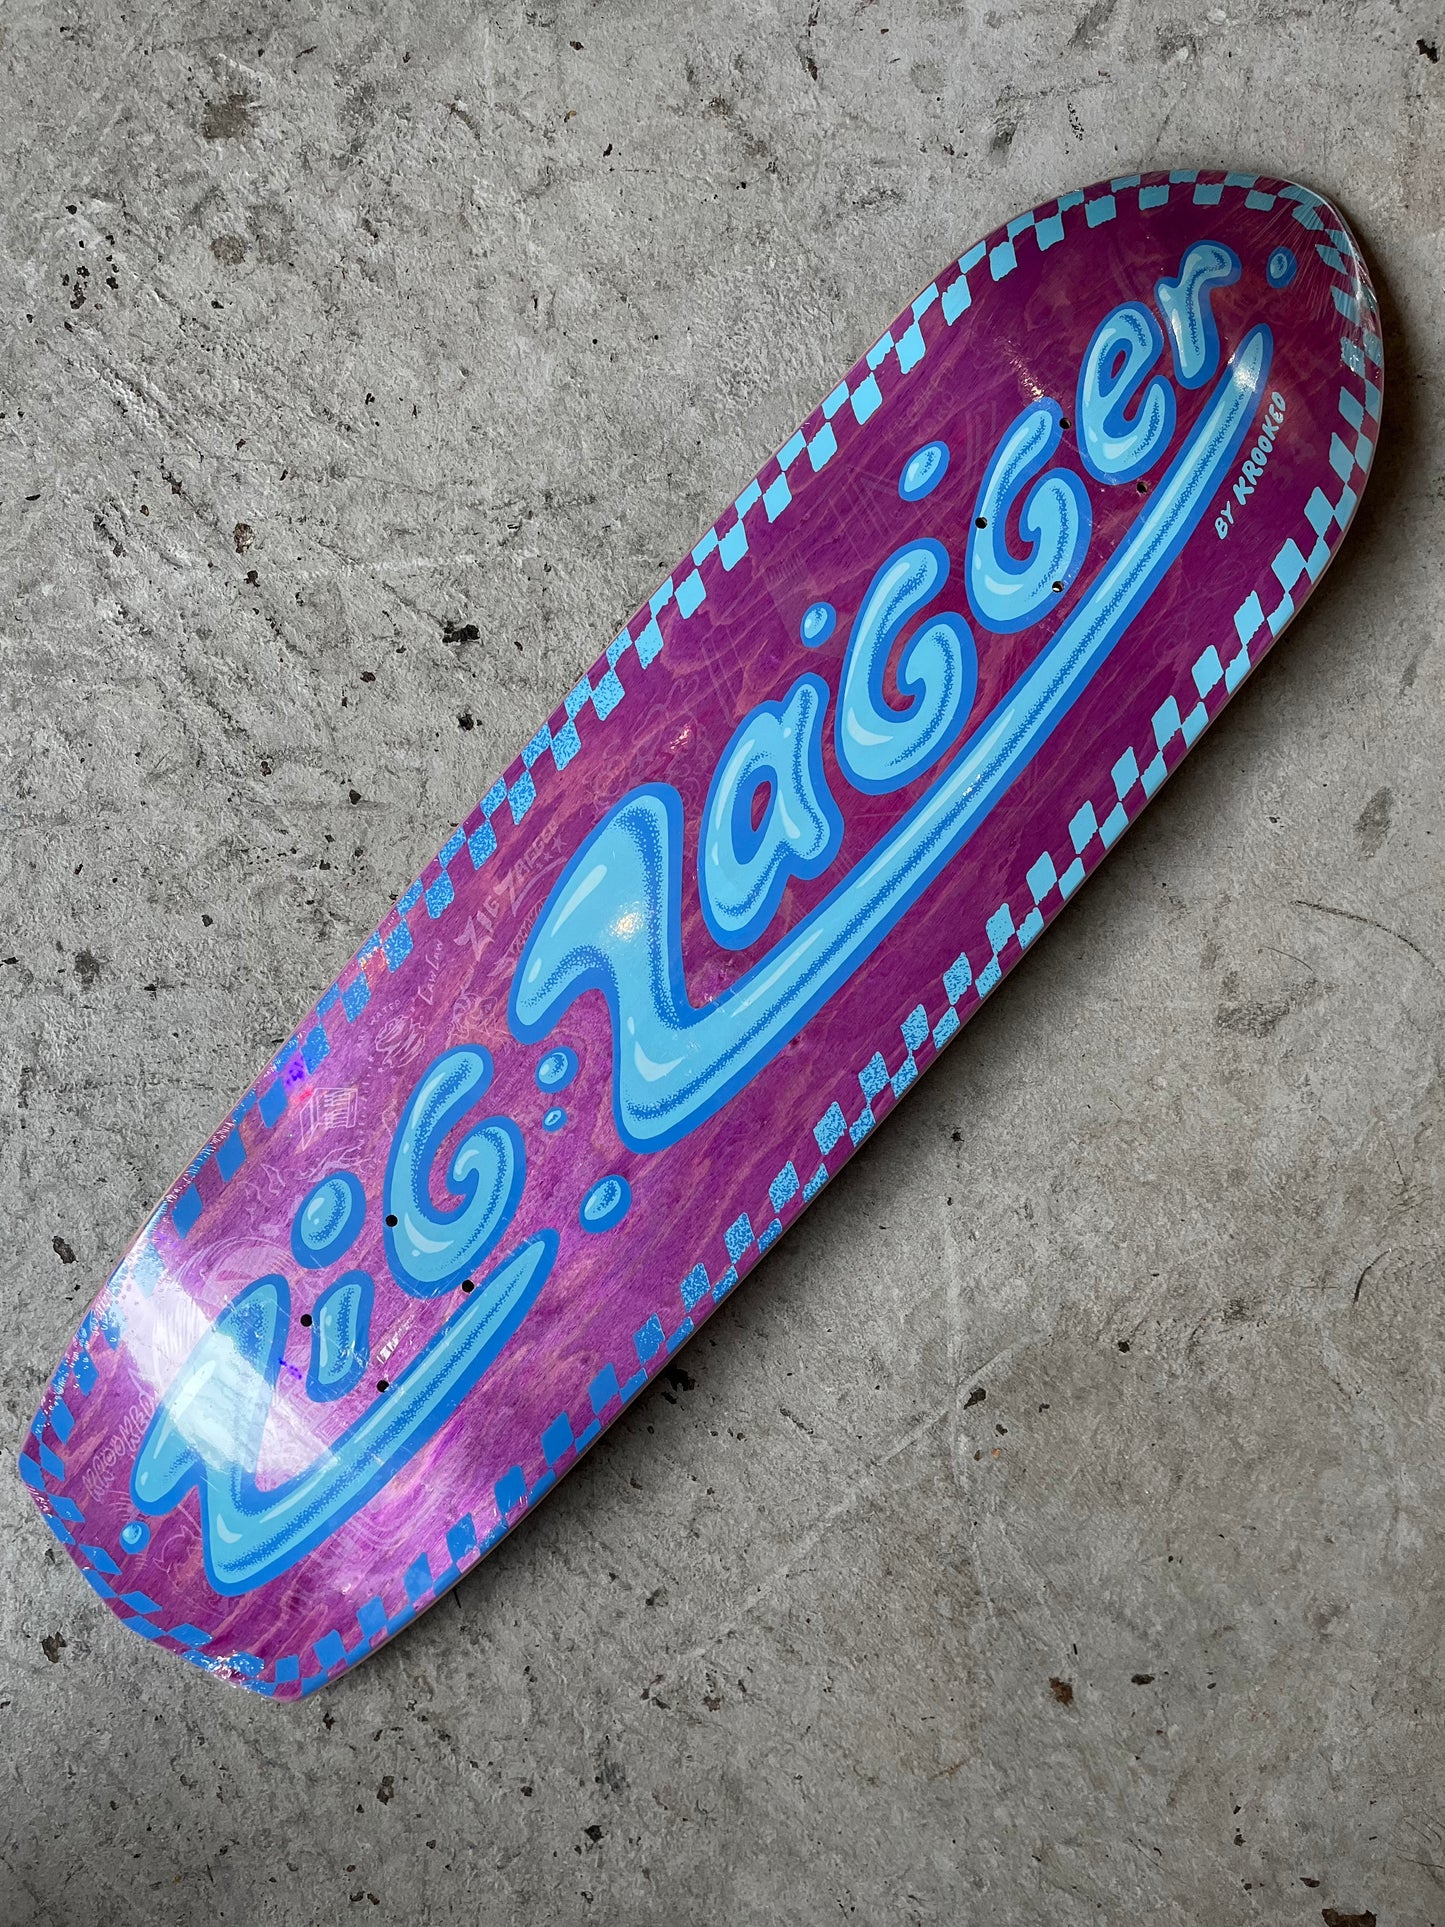 Zip Zagger Deck